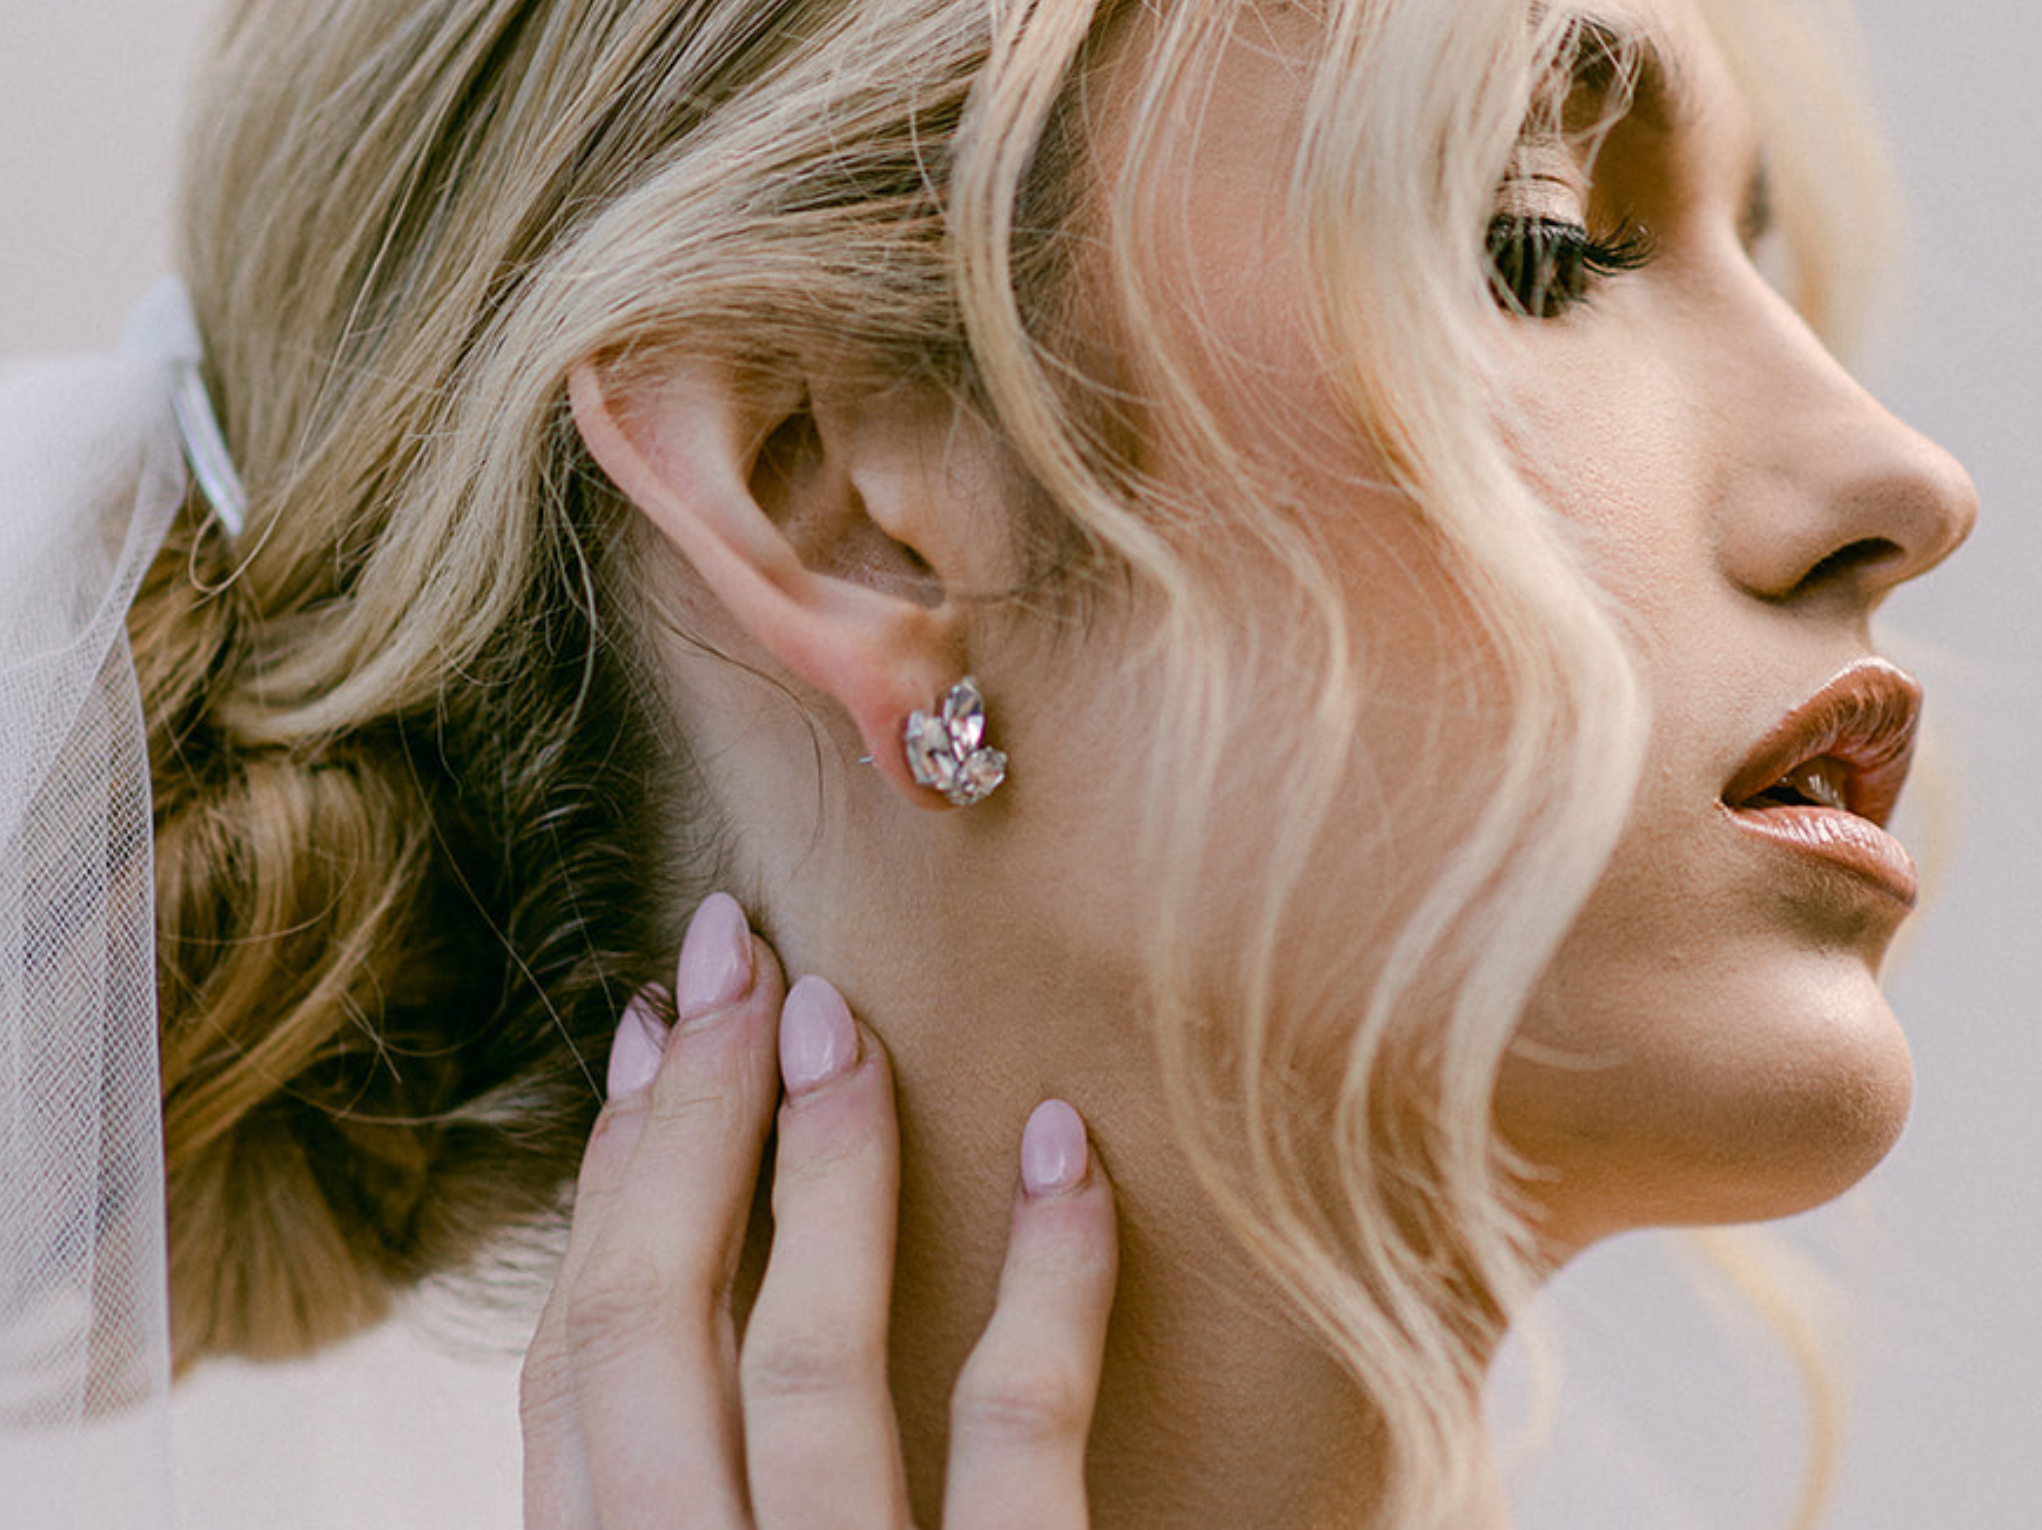 Anastasia Studs – Bridal Crystal Silver Trio Earrings